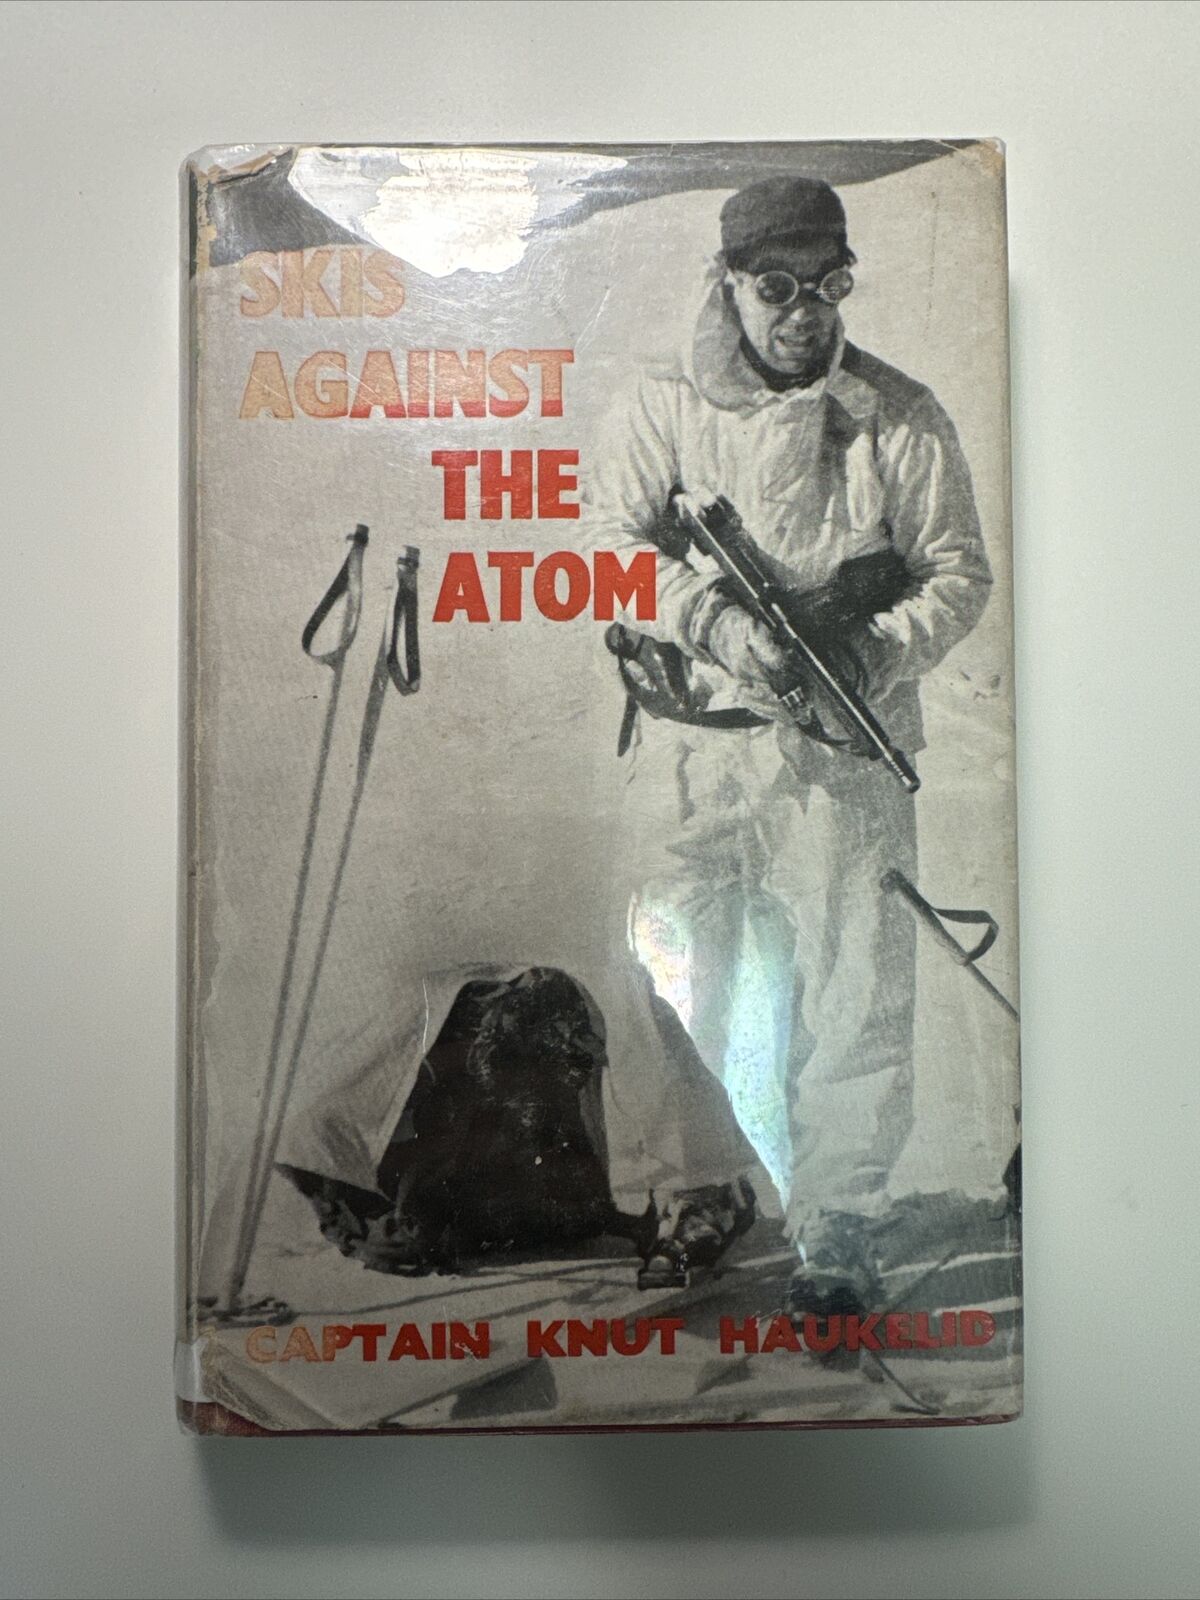 Rare Vintage 1954 1st Edition-Skis Against the Atom by Capt. K Haukelid HC DJ